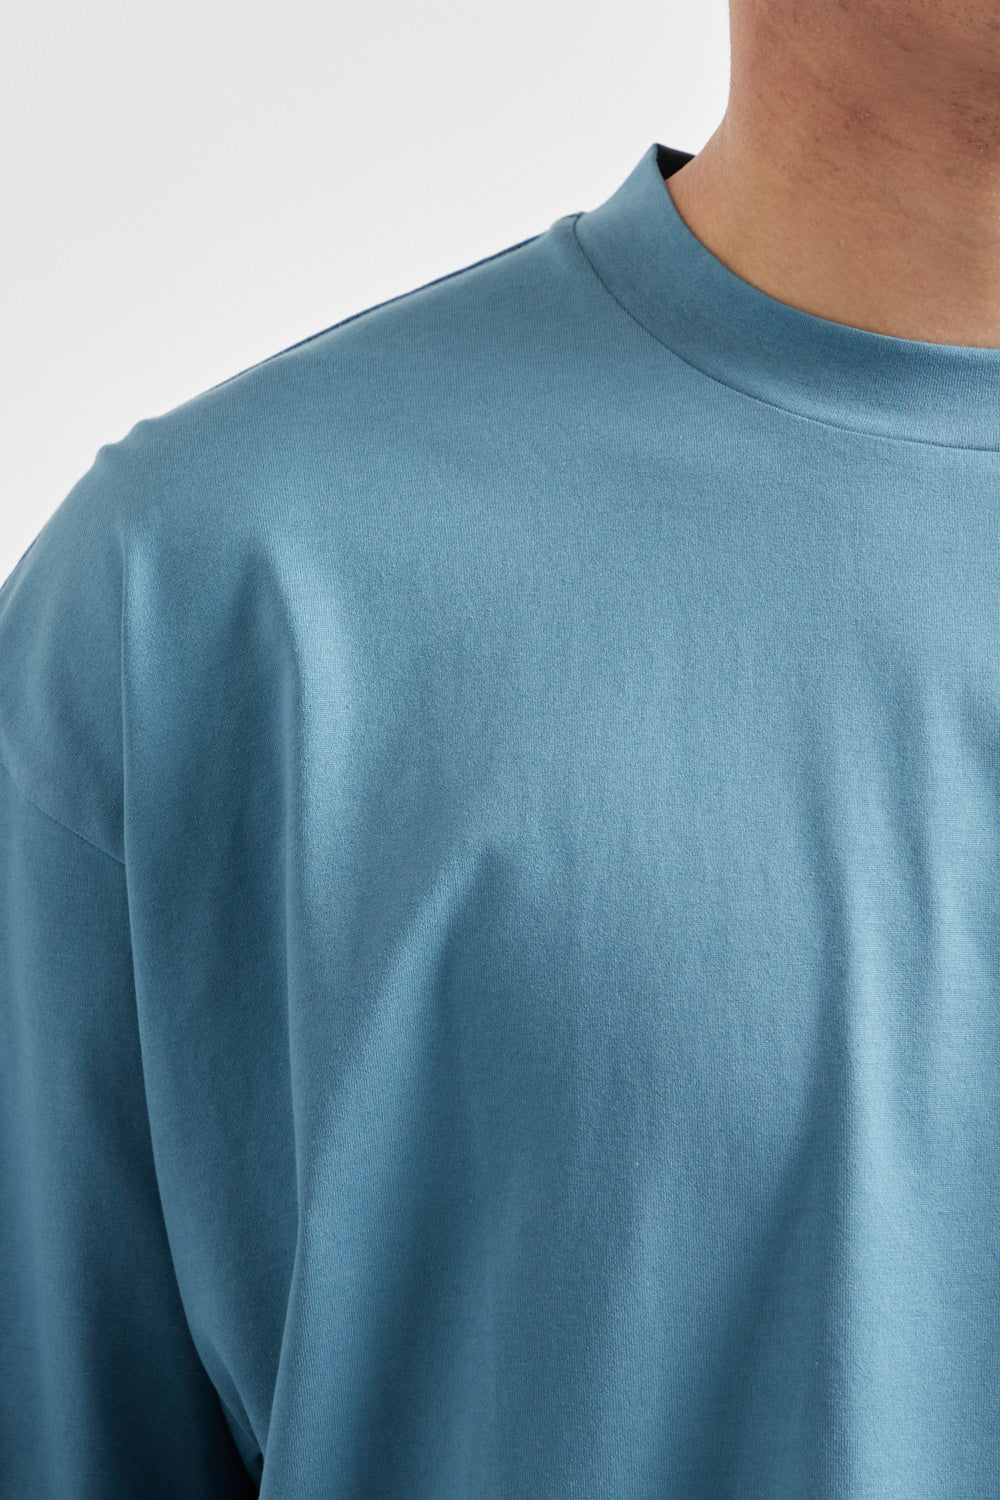 SUVIN 60/2 Oversized Longsleeve T-Shirt - Blue Gray